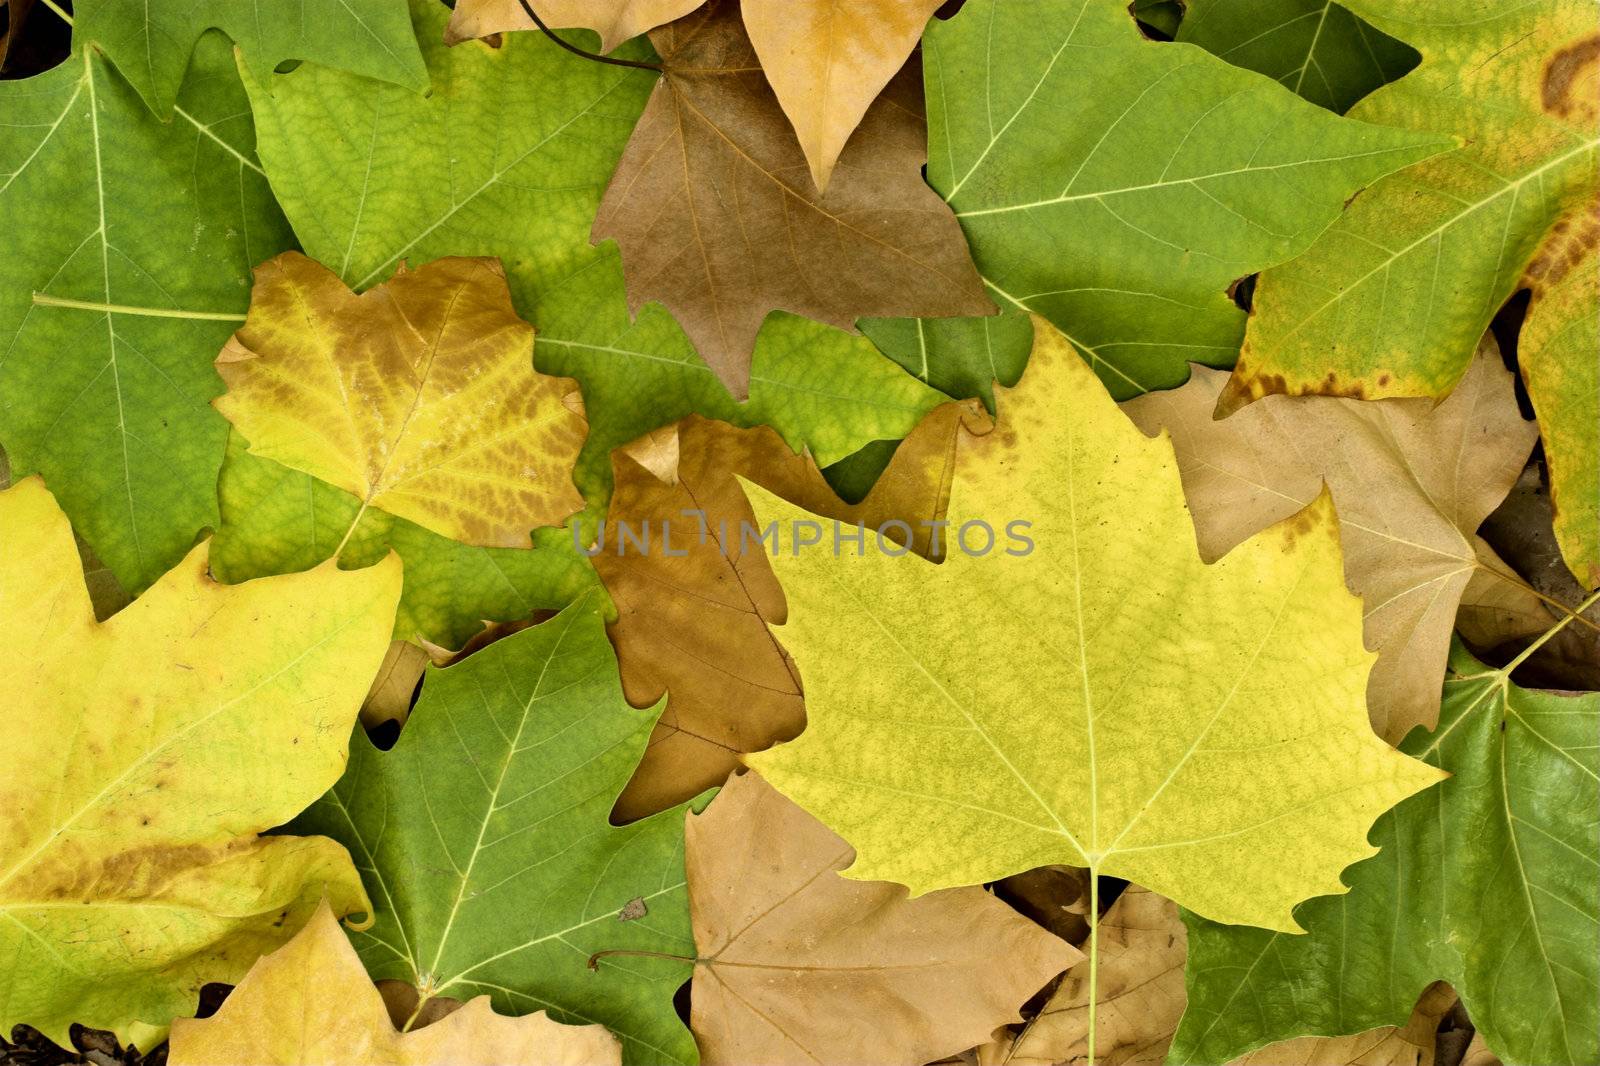 Fall leaves by Iko